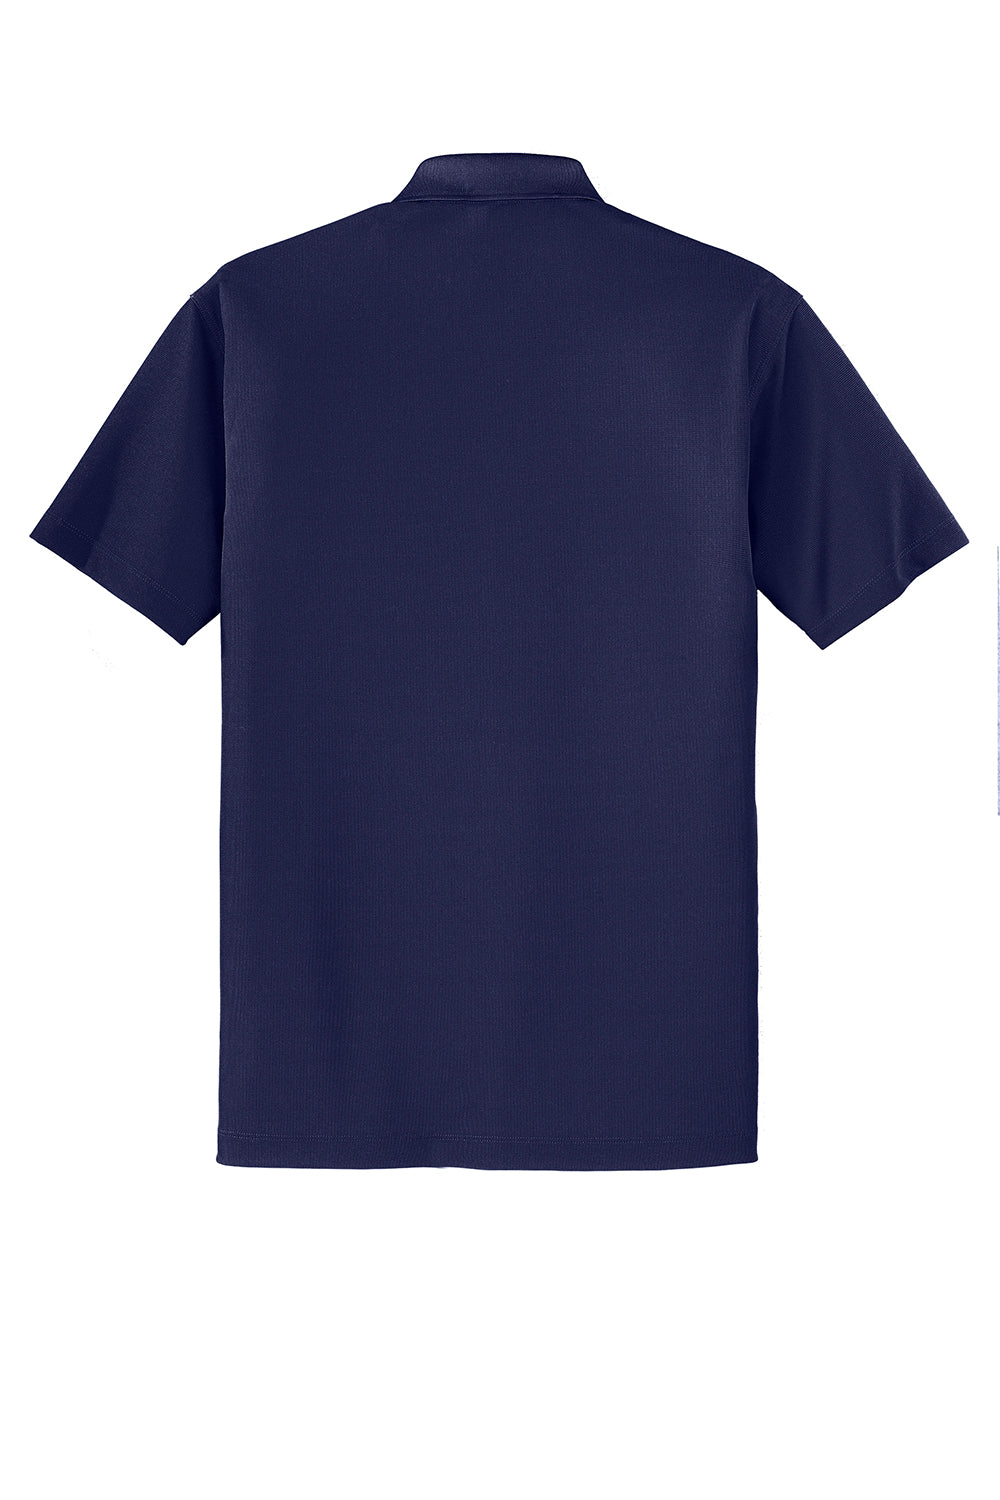 Port Authority K572 Mens Dry Zone Moisture Wicking Short Sleeve Polo Shirt Navy Blue Flat Back